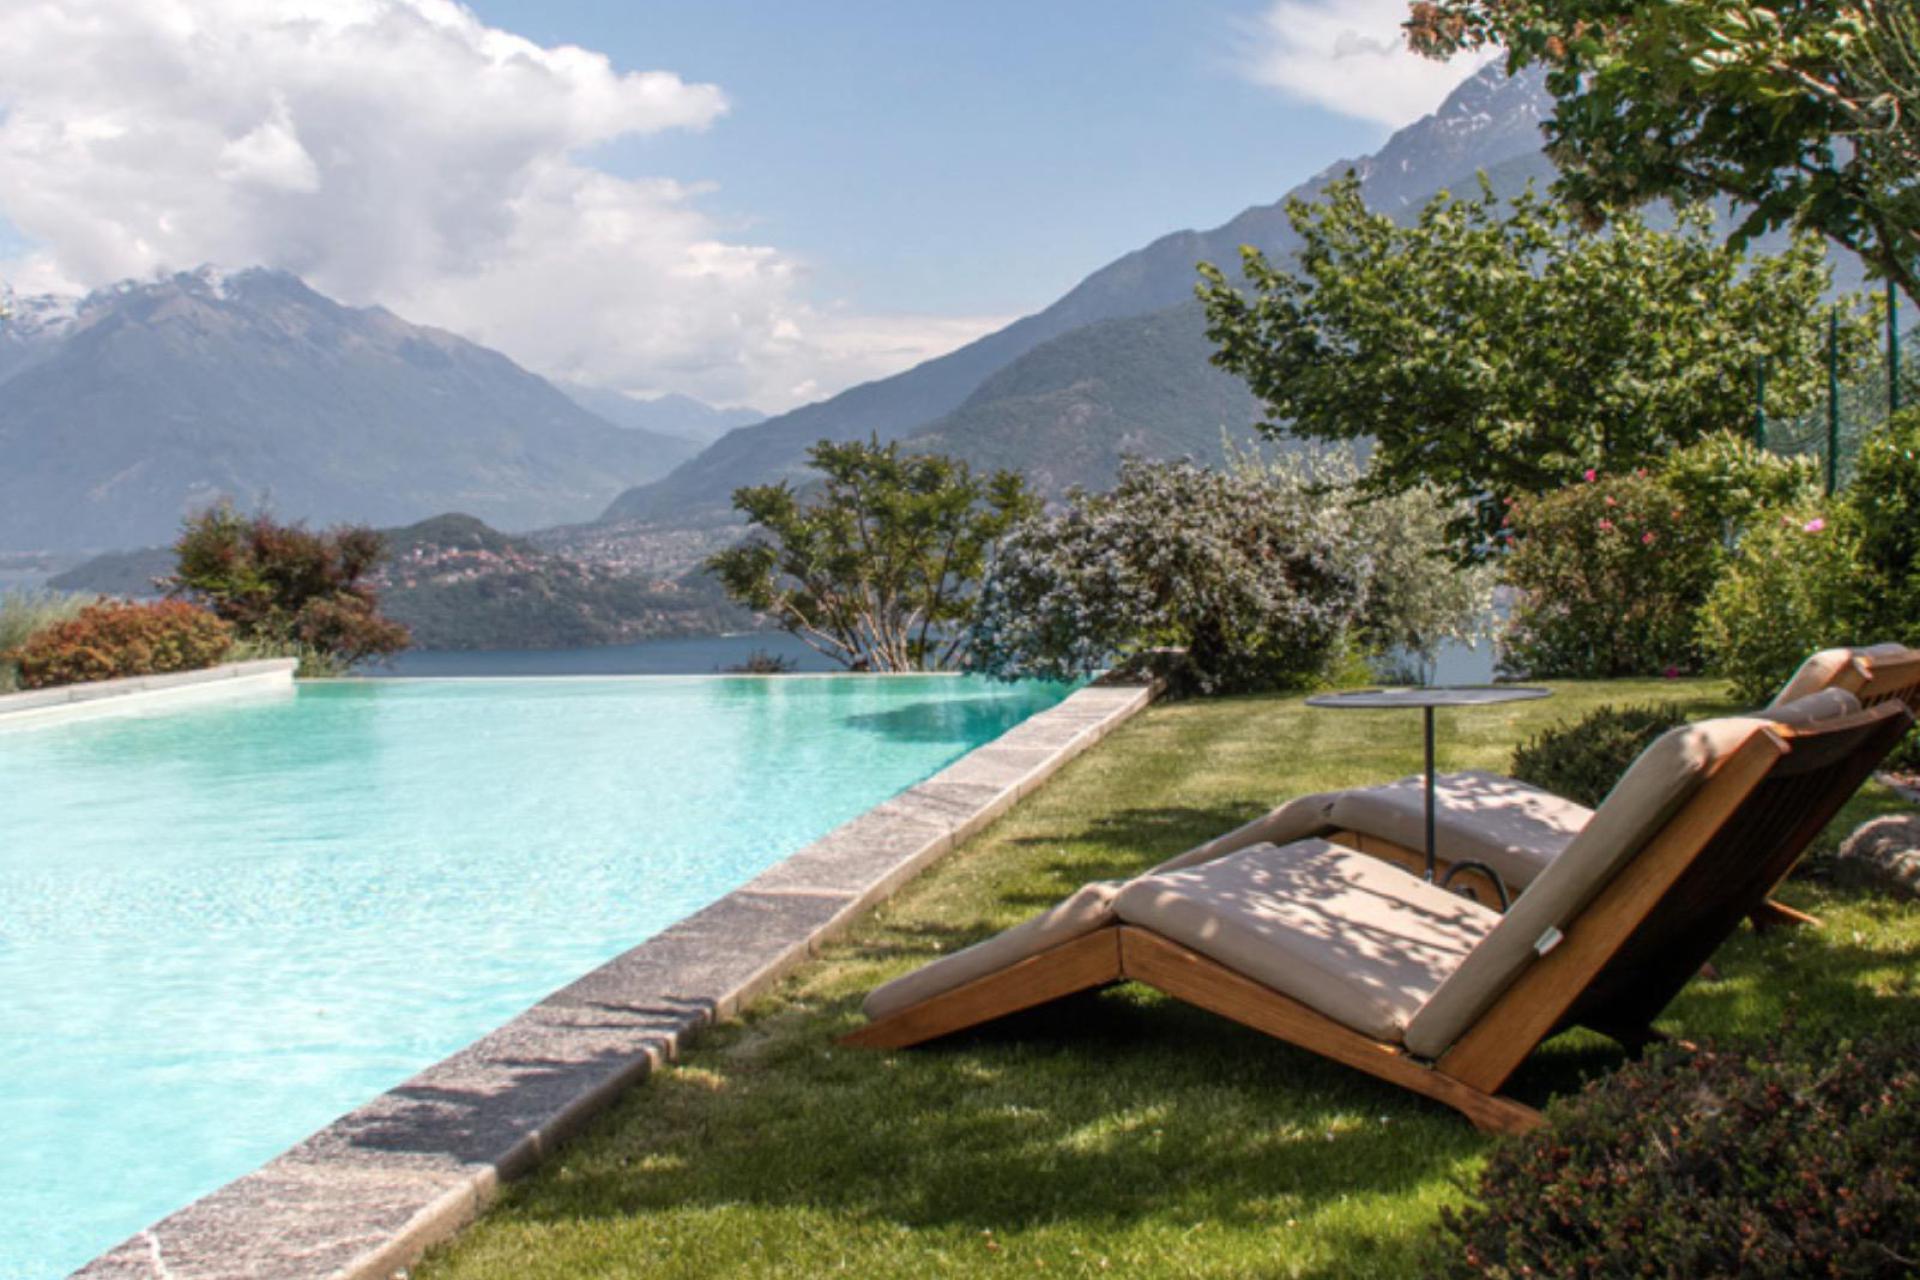 Agriturismo Lake Como and Lake Garda Luxury agriturismo with pool overlooking Lake Como!